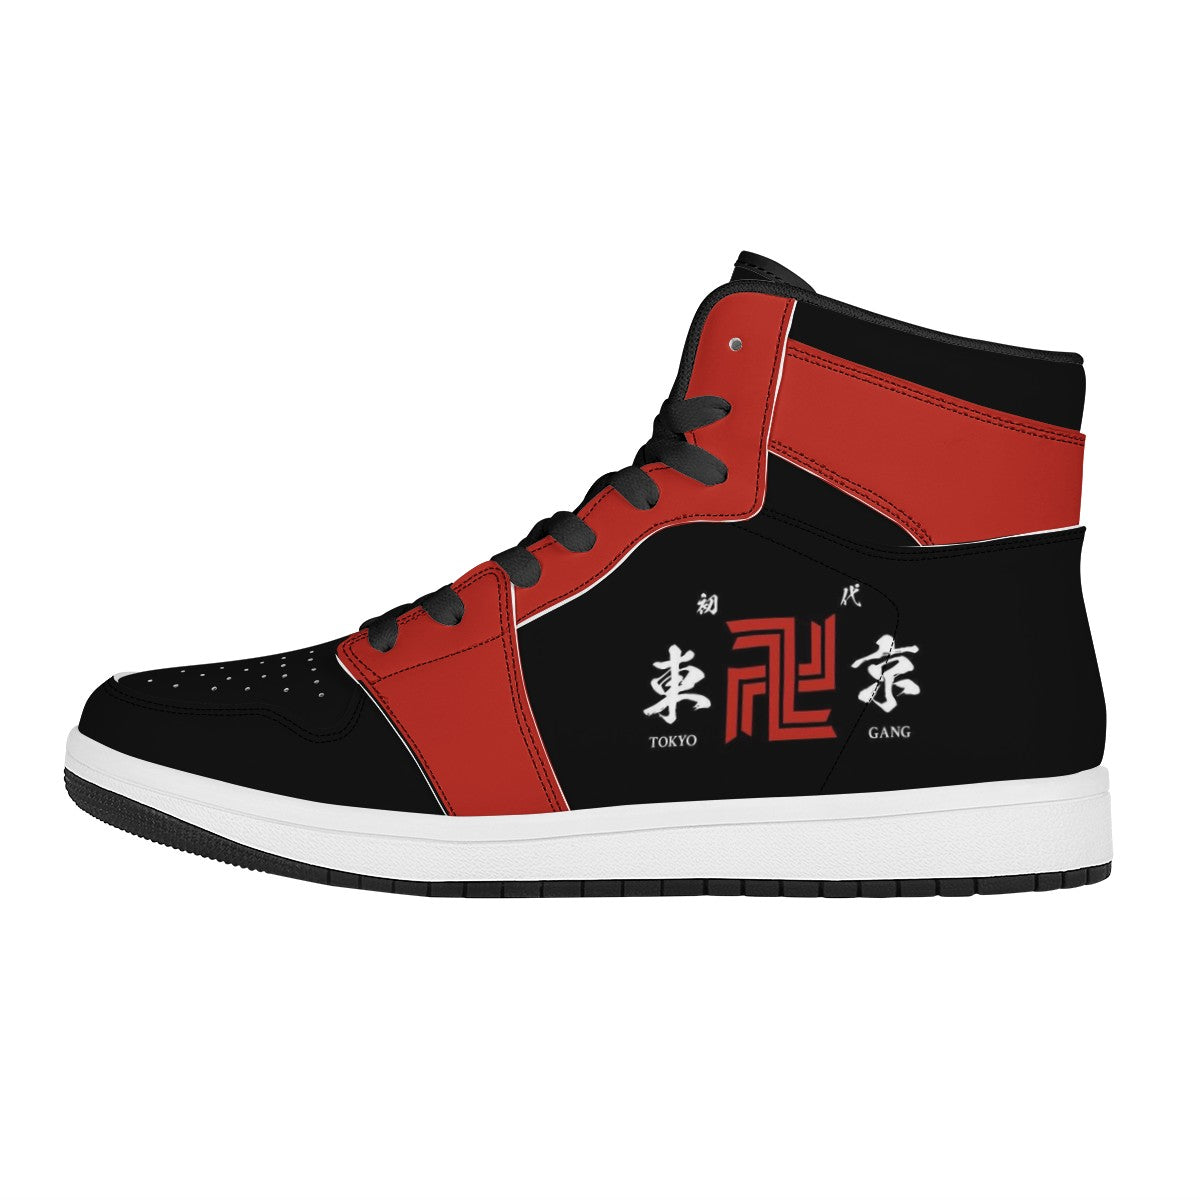 Tokyo Gang Custom Nike Air Jordan 1 Leather Sneaker